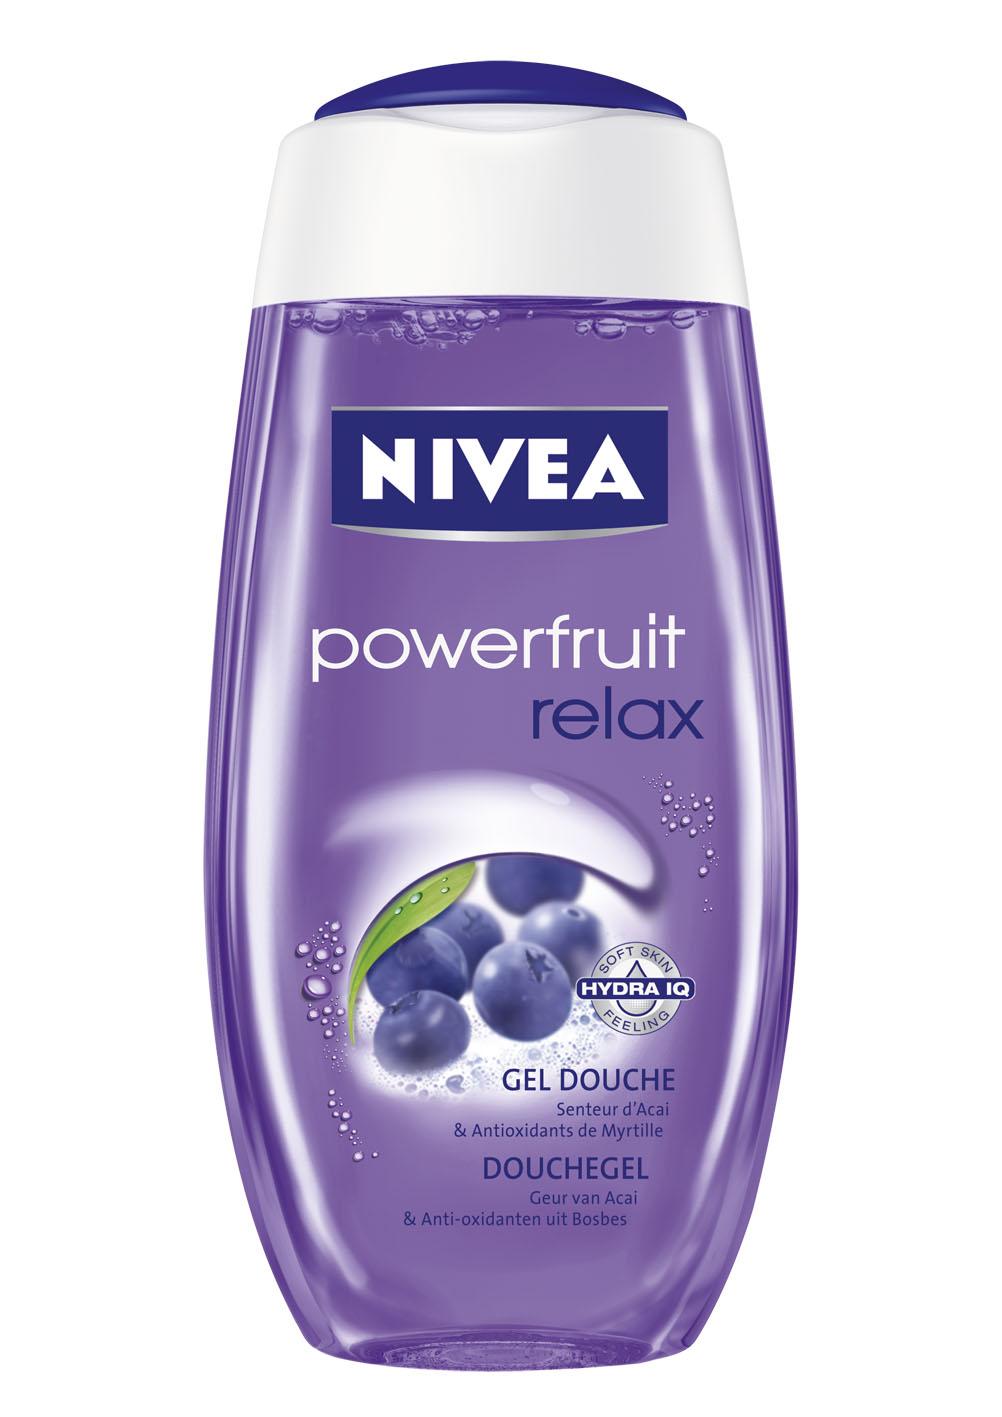 Nivea Powerfruit Relax - €2.99